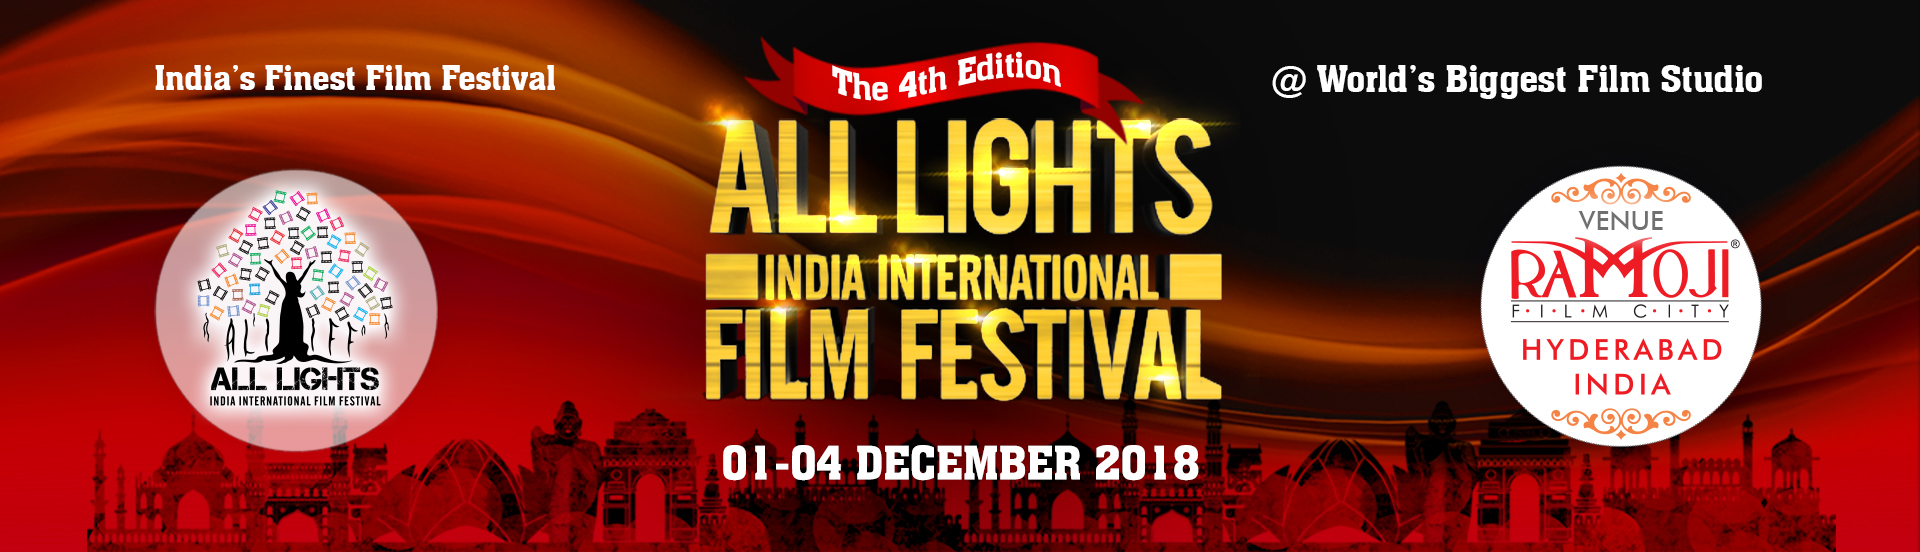 Film Festival India Carnival India Entertainment Events India